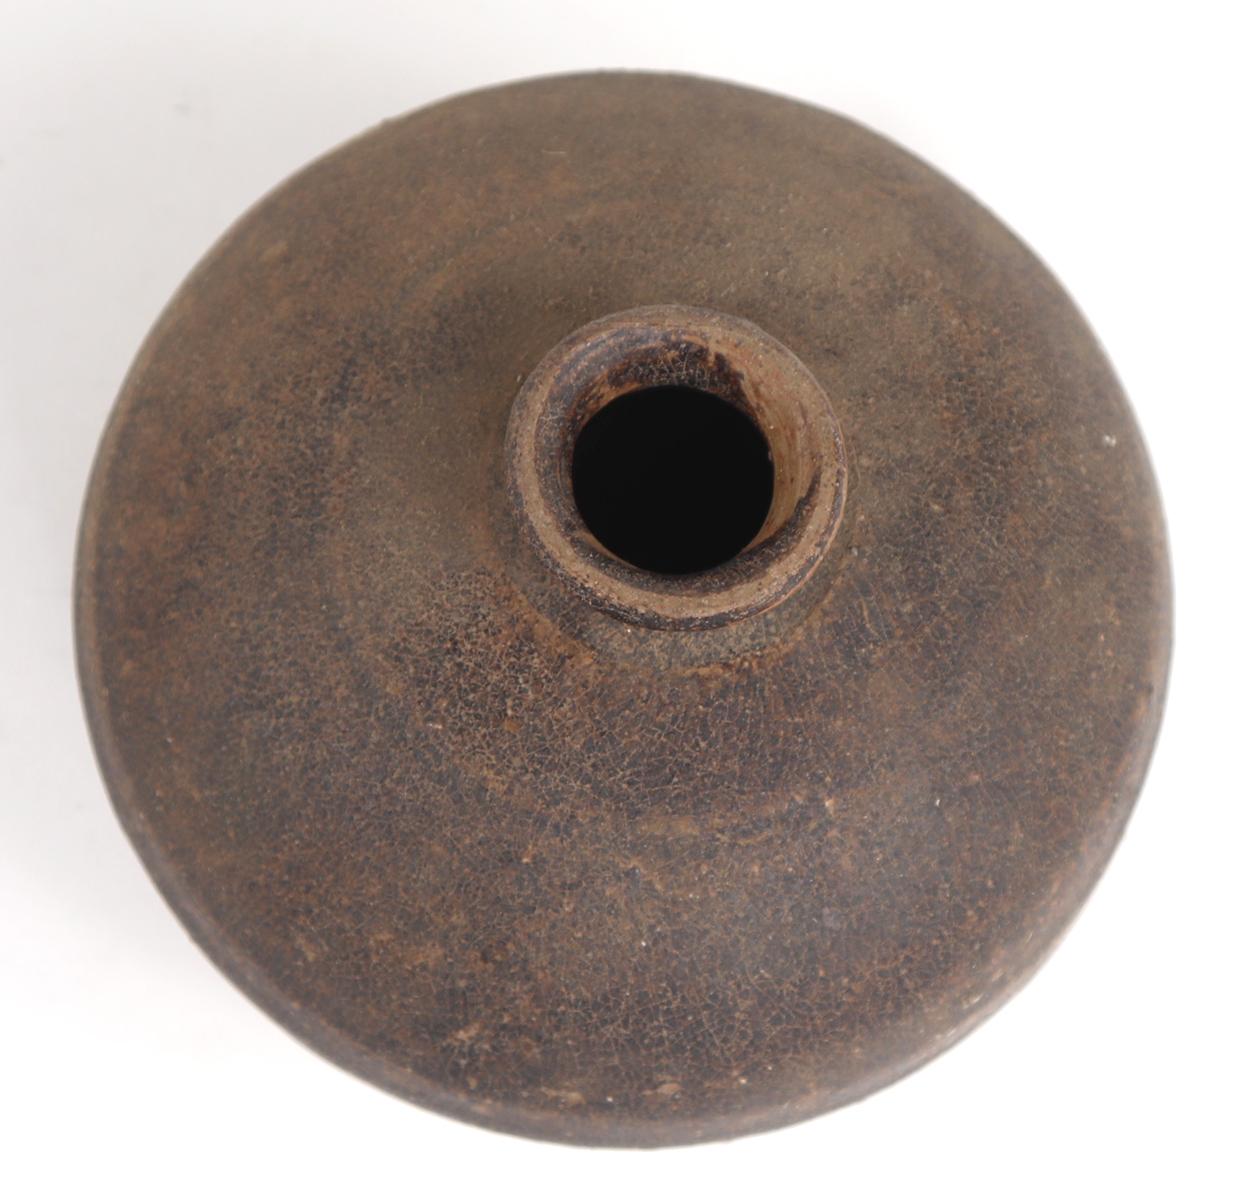 Sung Dynasty Stoneware Jarlet